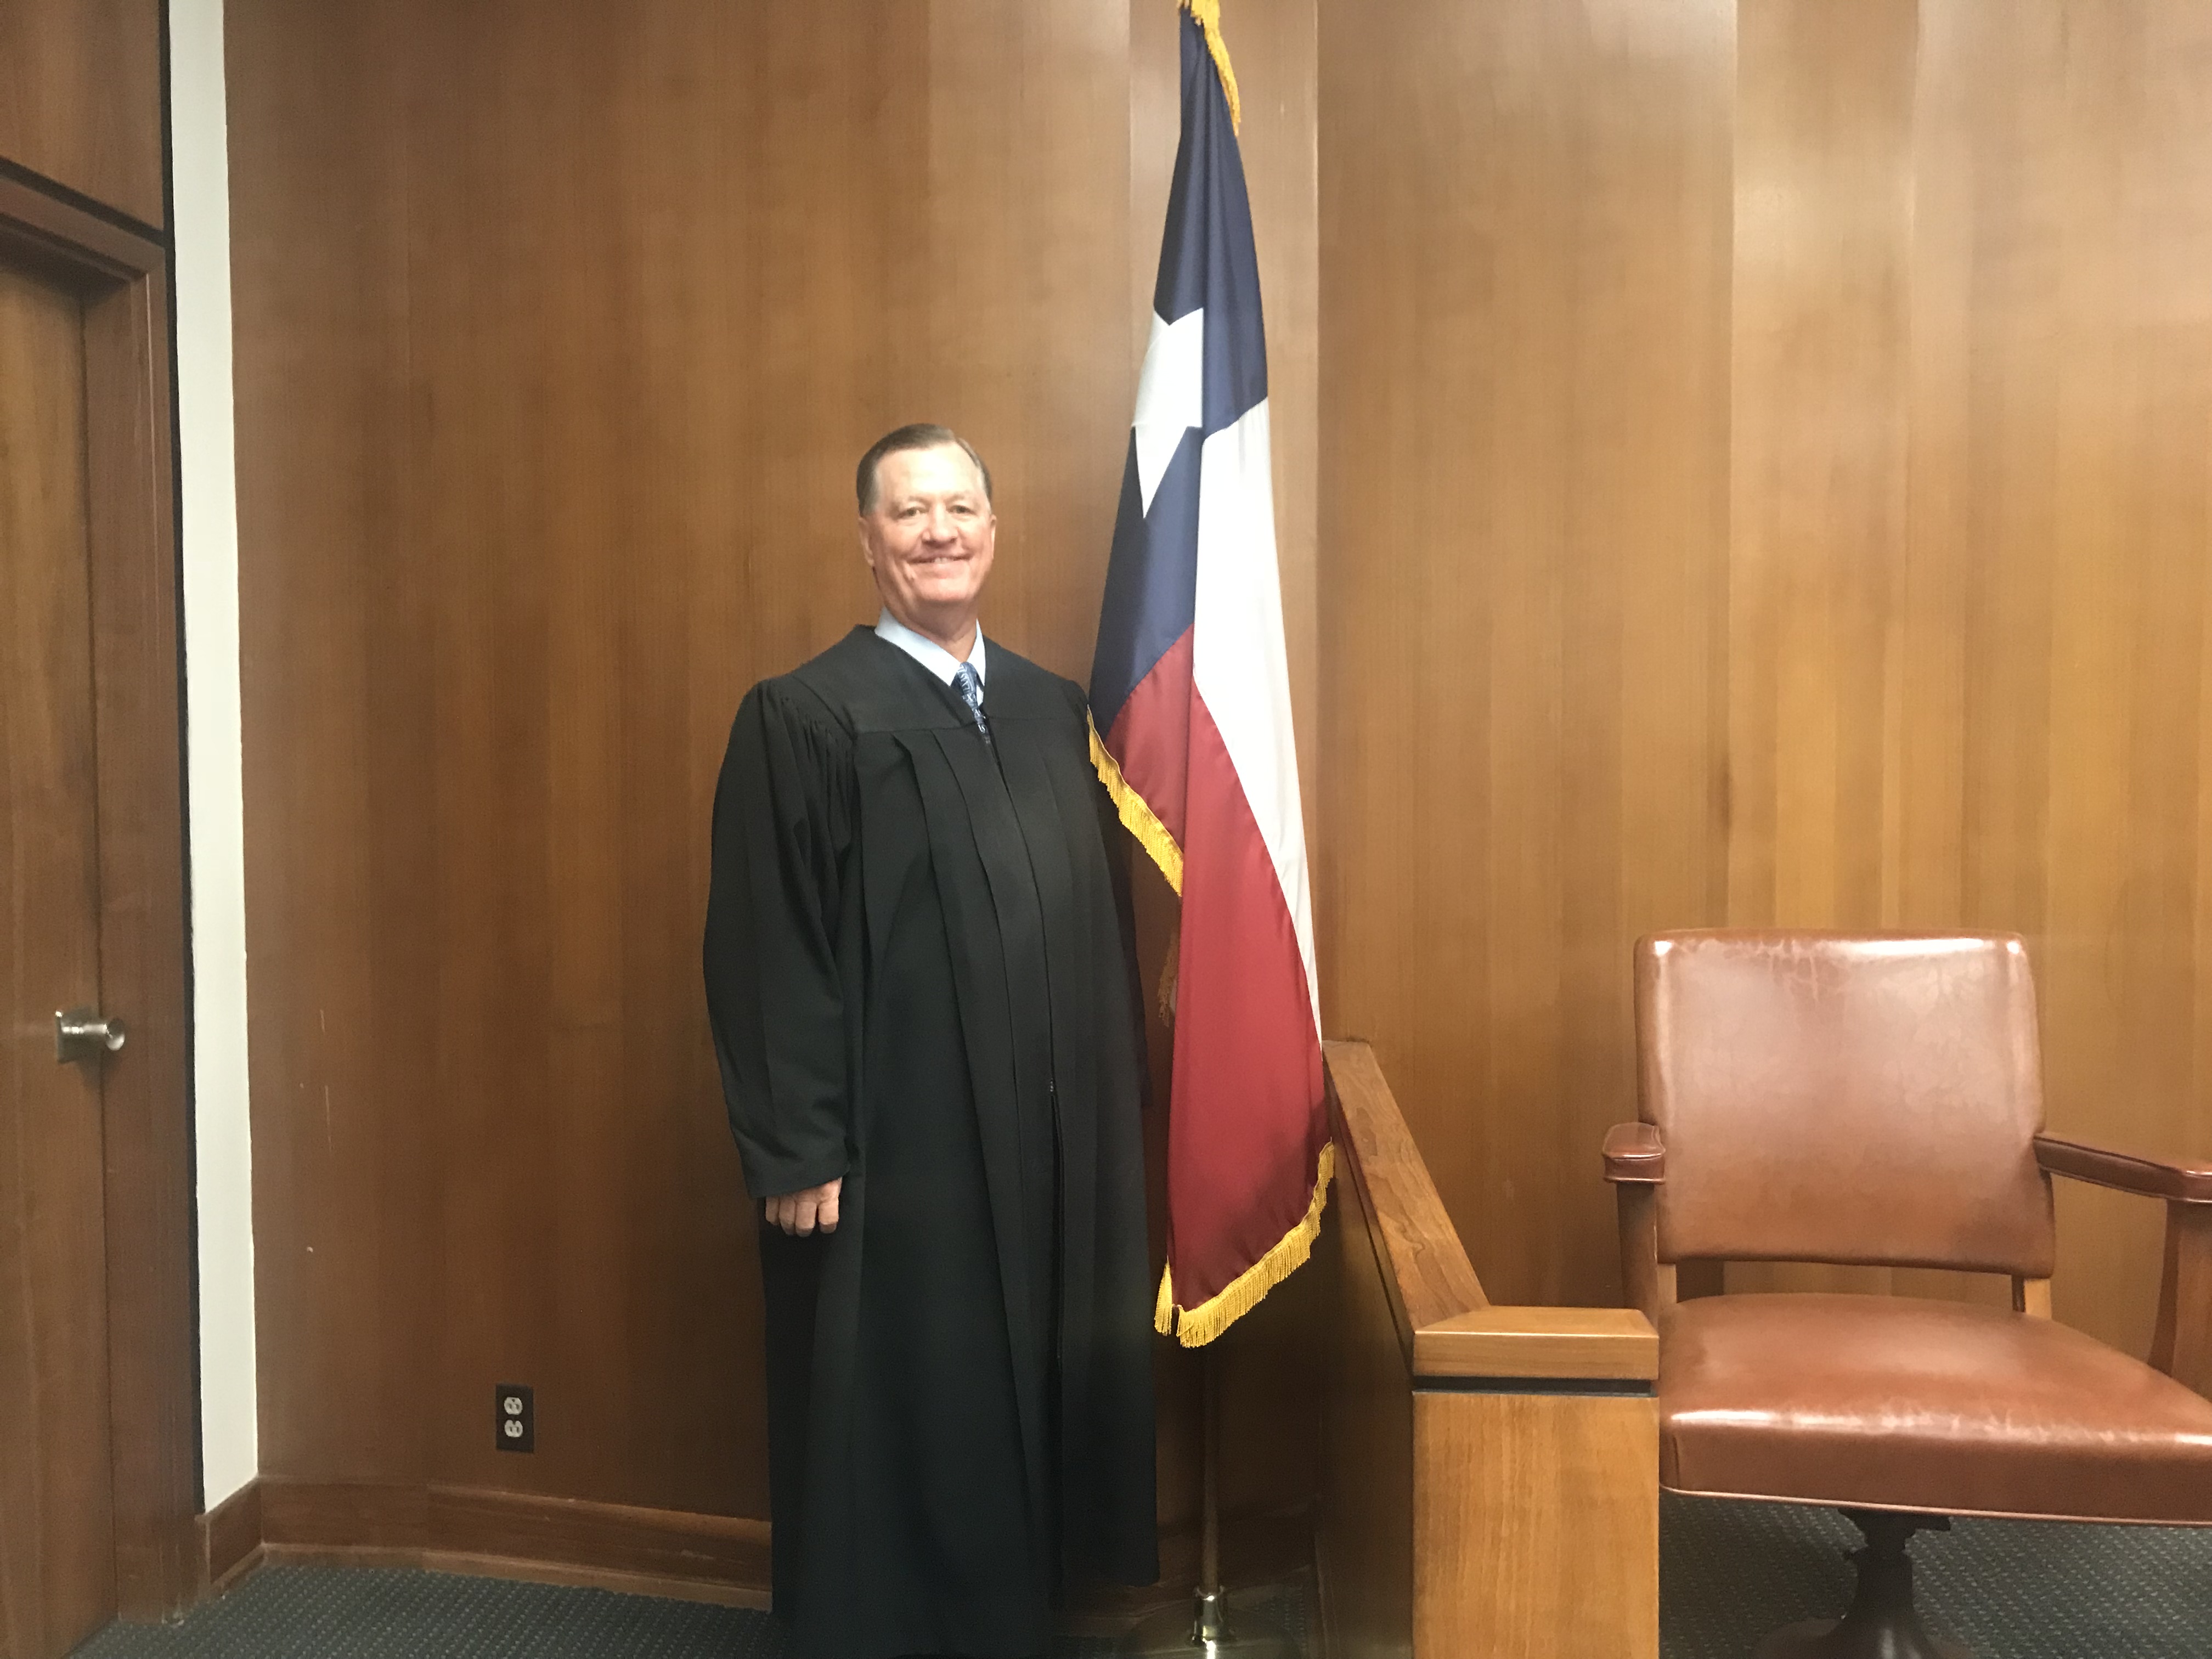 2. Dallas Judge with Bold Blue Hair: Meet Judge Sarah Johnson - wide 6